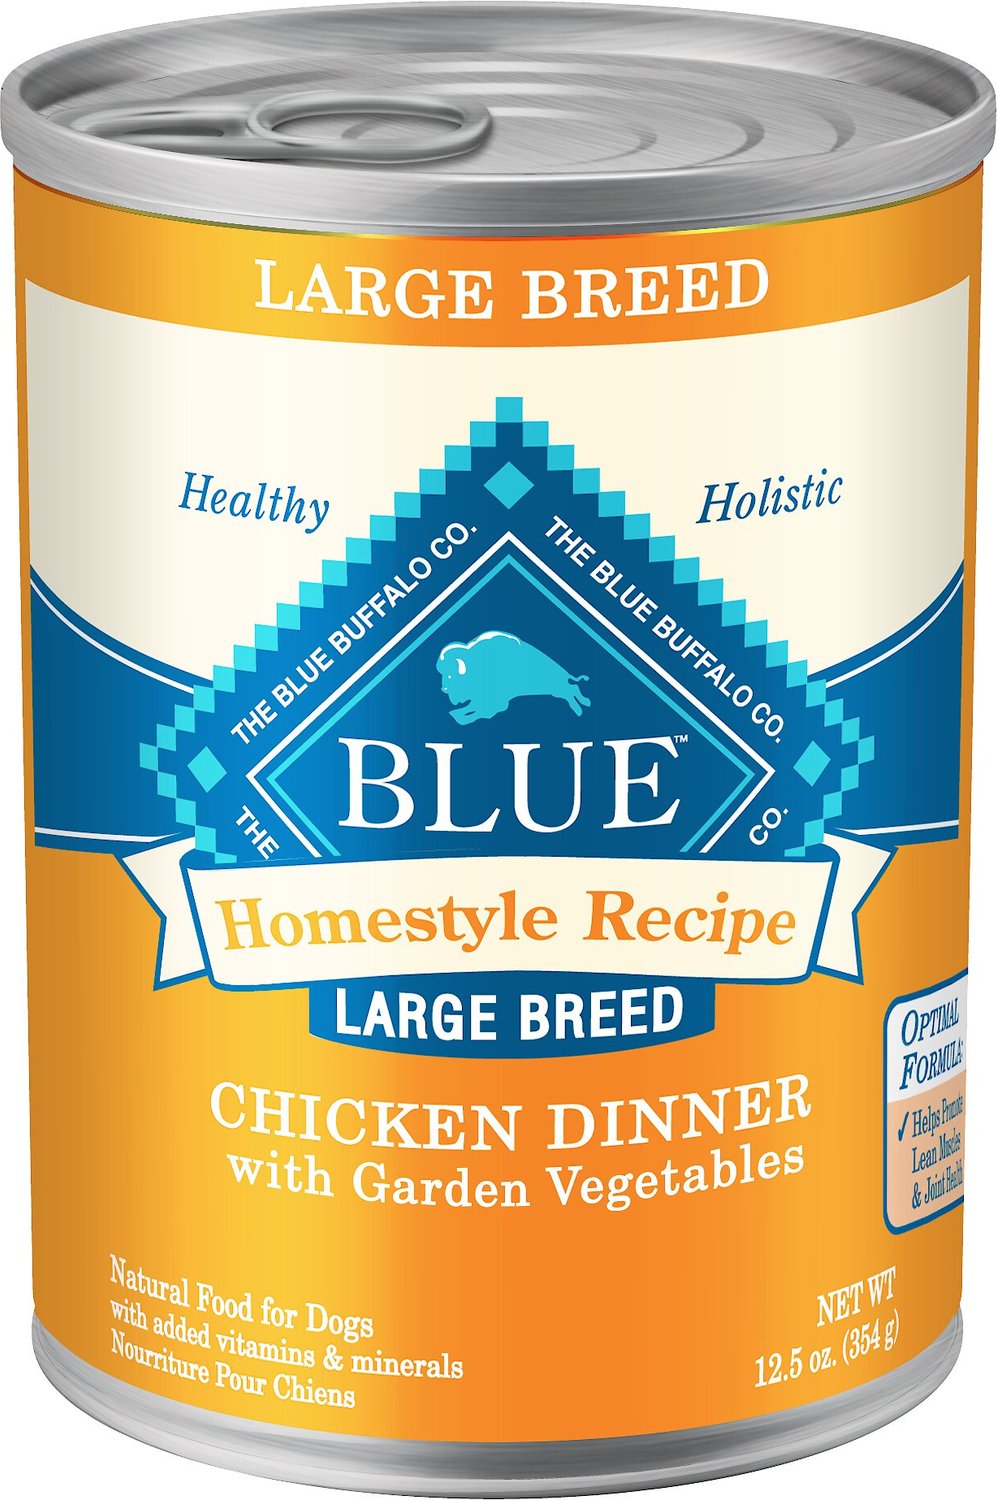 Blue Buffalo Homestyle Recipe Large Breed Chicken Dinner